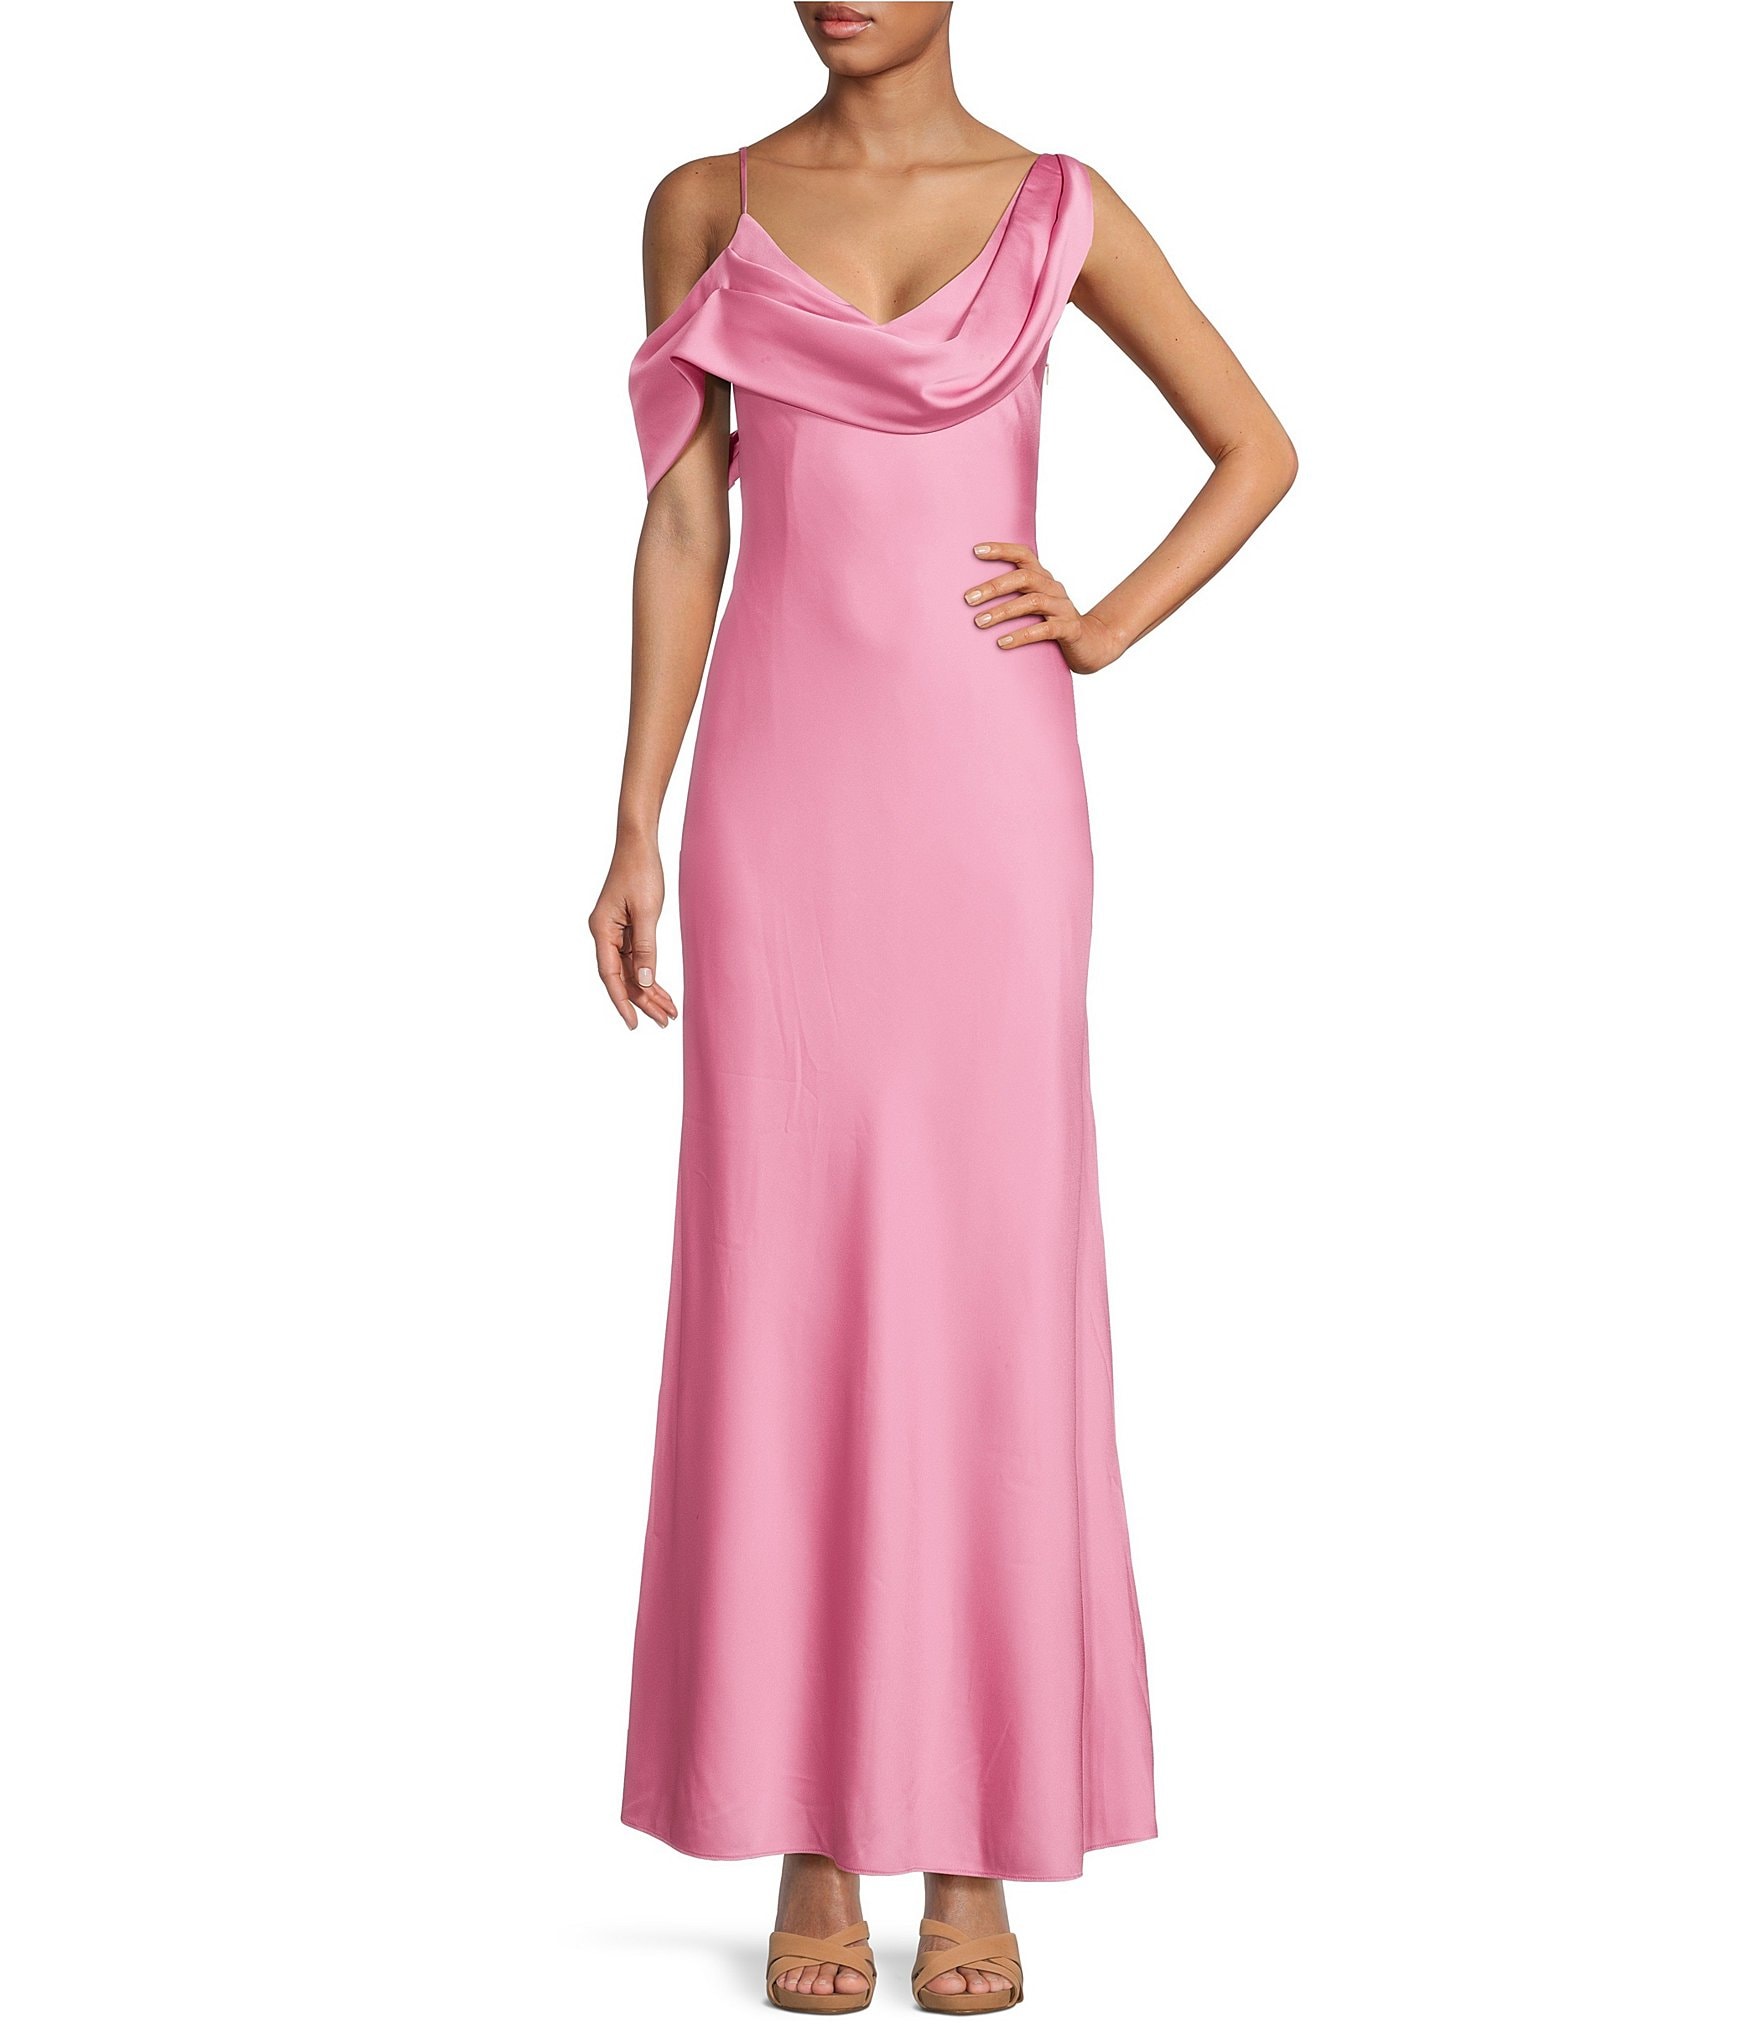 White Women's Formal Dresses & Evening Gowns | Dillard's